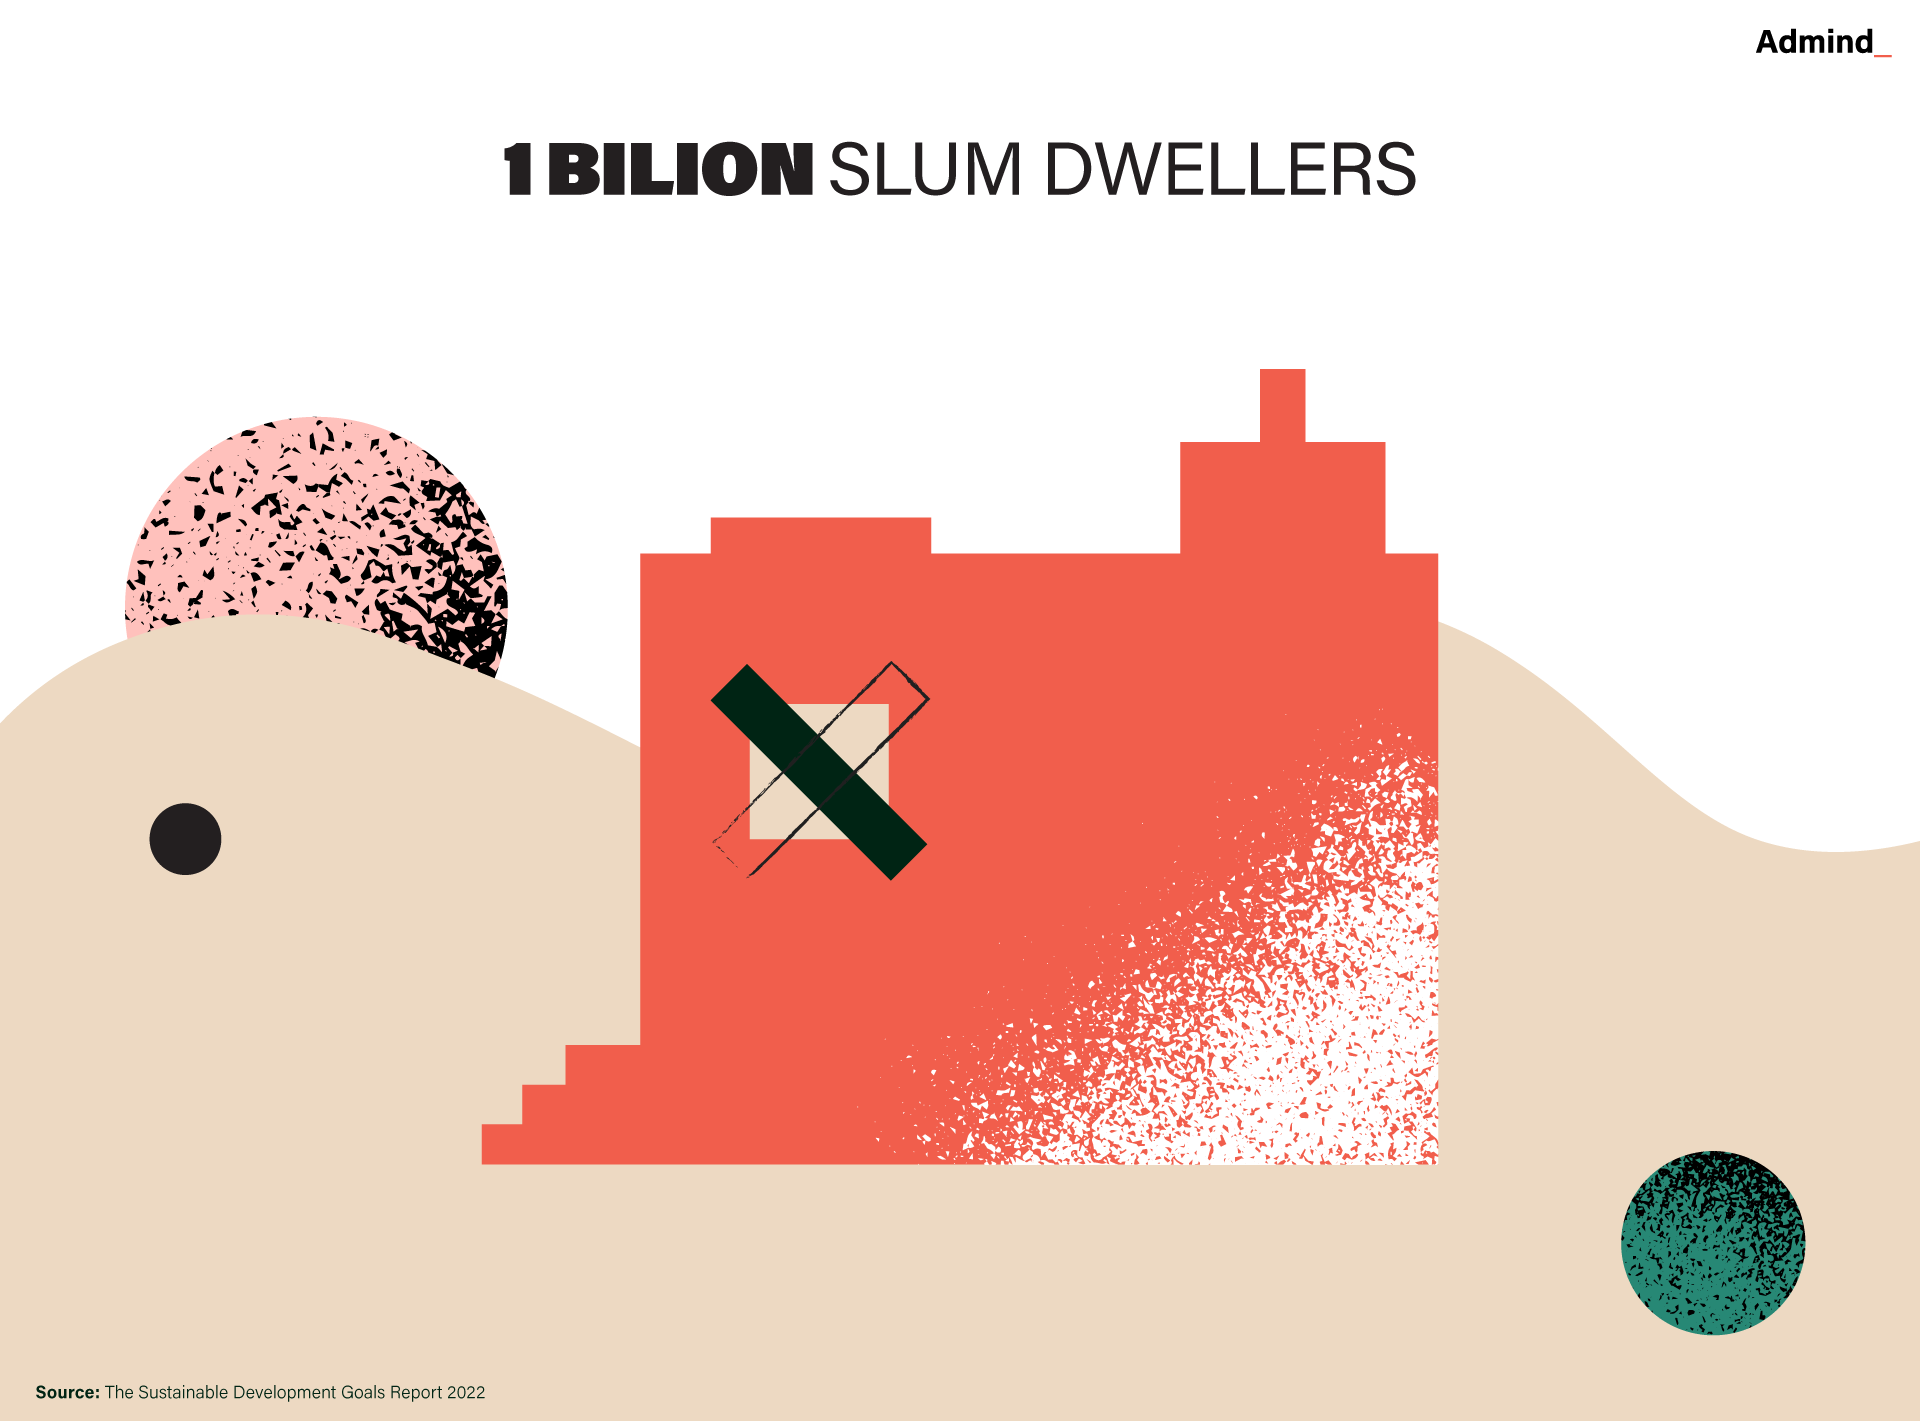 There are 1 billion slum dwellers in the world